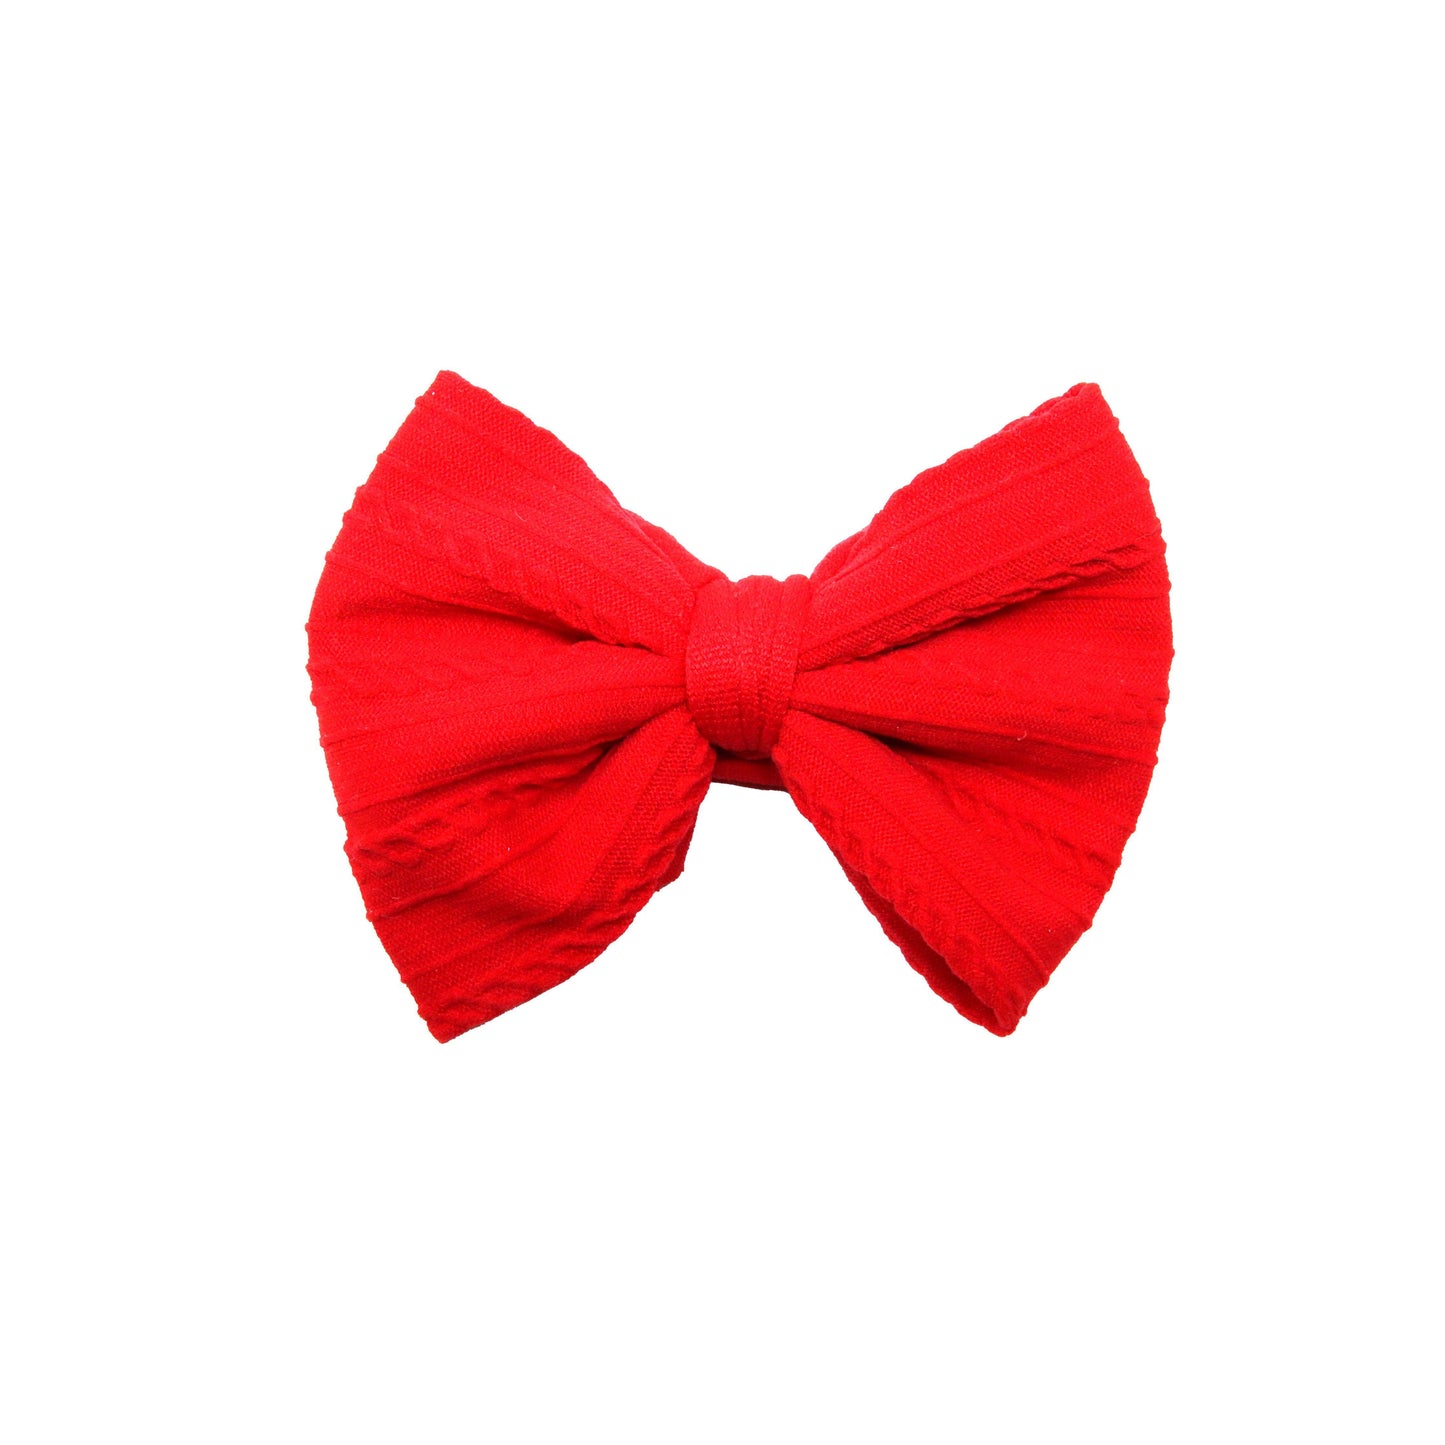 Red Braid Knit Bow 4"